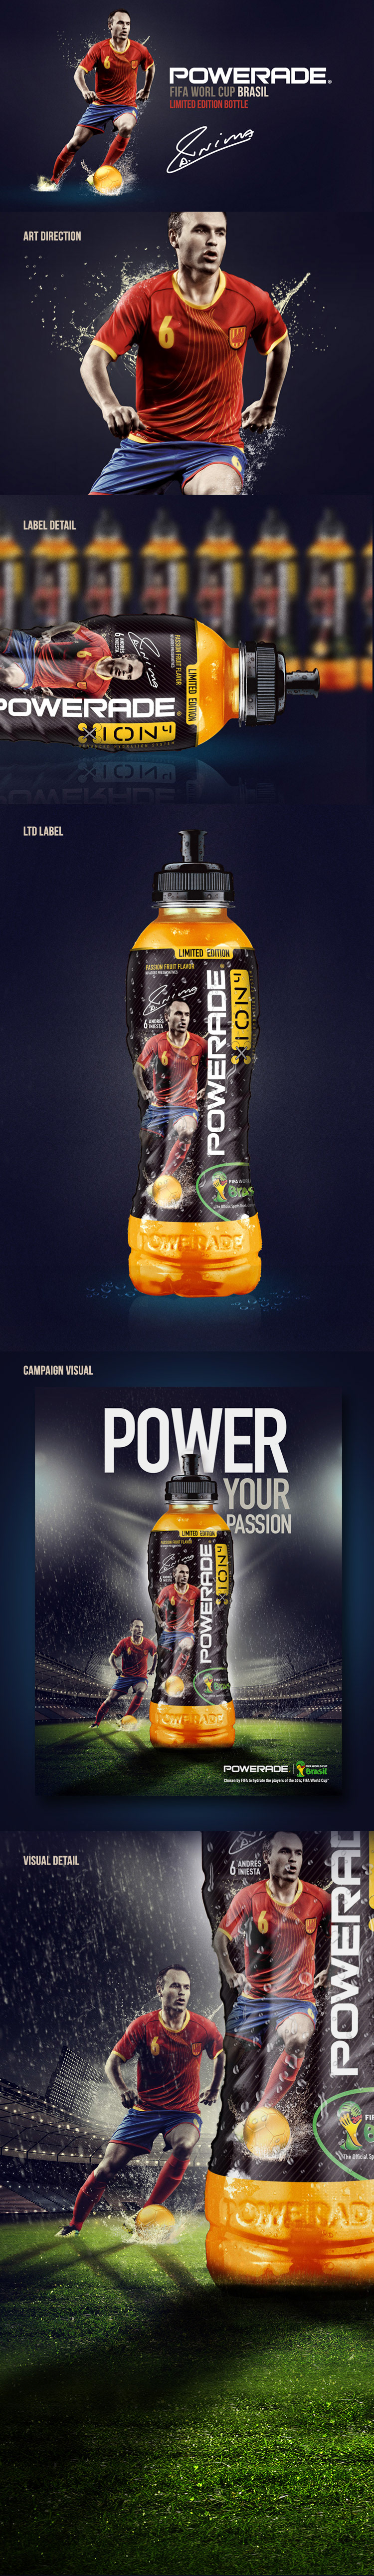 FIFA Brasil iniesta Coca-Cola powerade Label bottle photo soccer sport drink isotonic energy